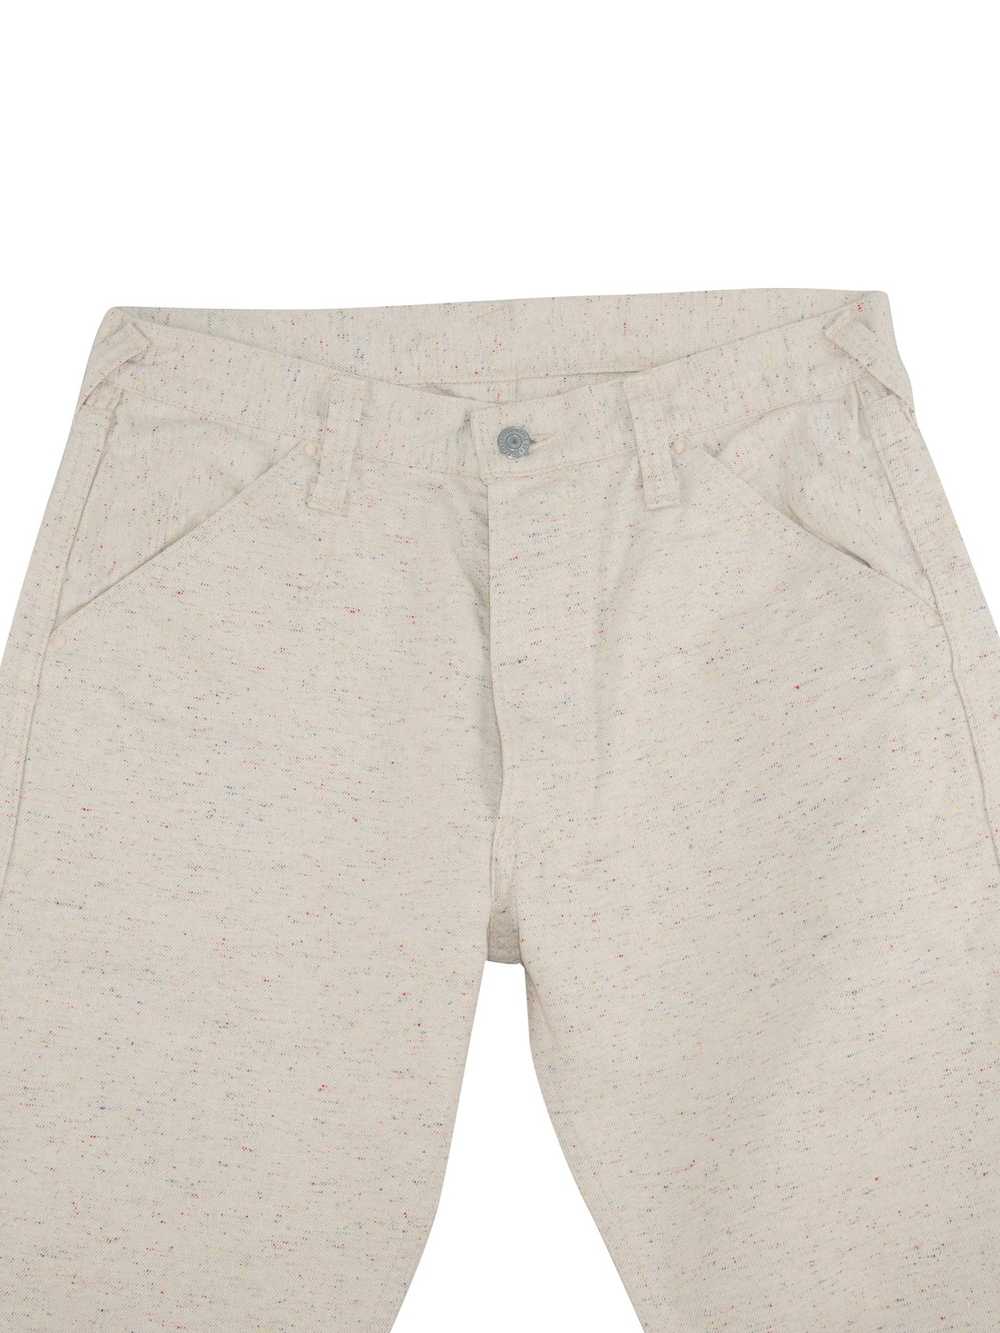 Evisu Multicolor Tweed White Denim Jeans Pants - image 5